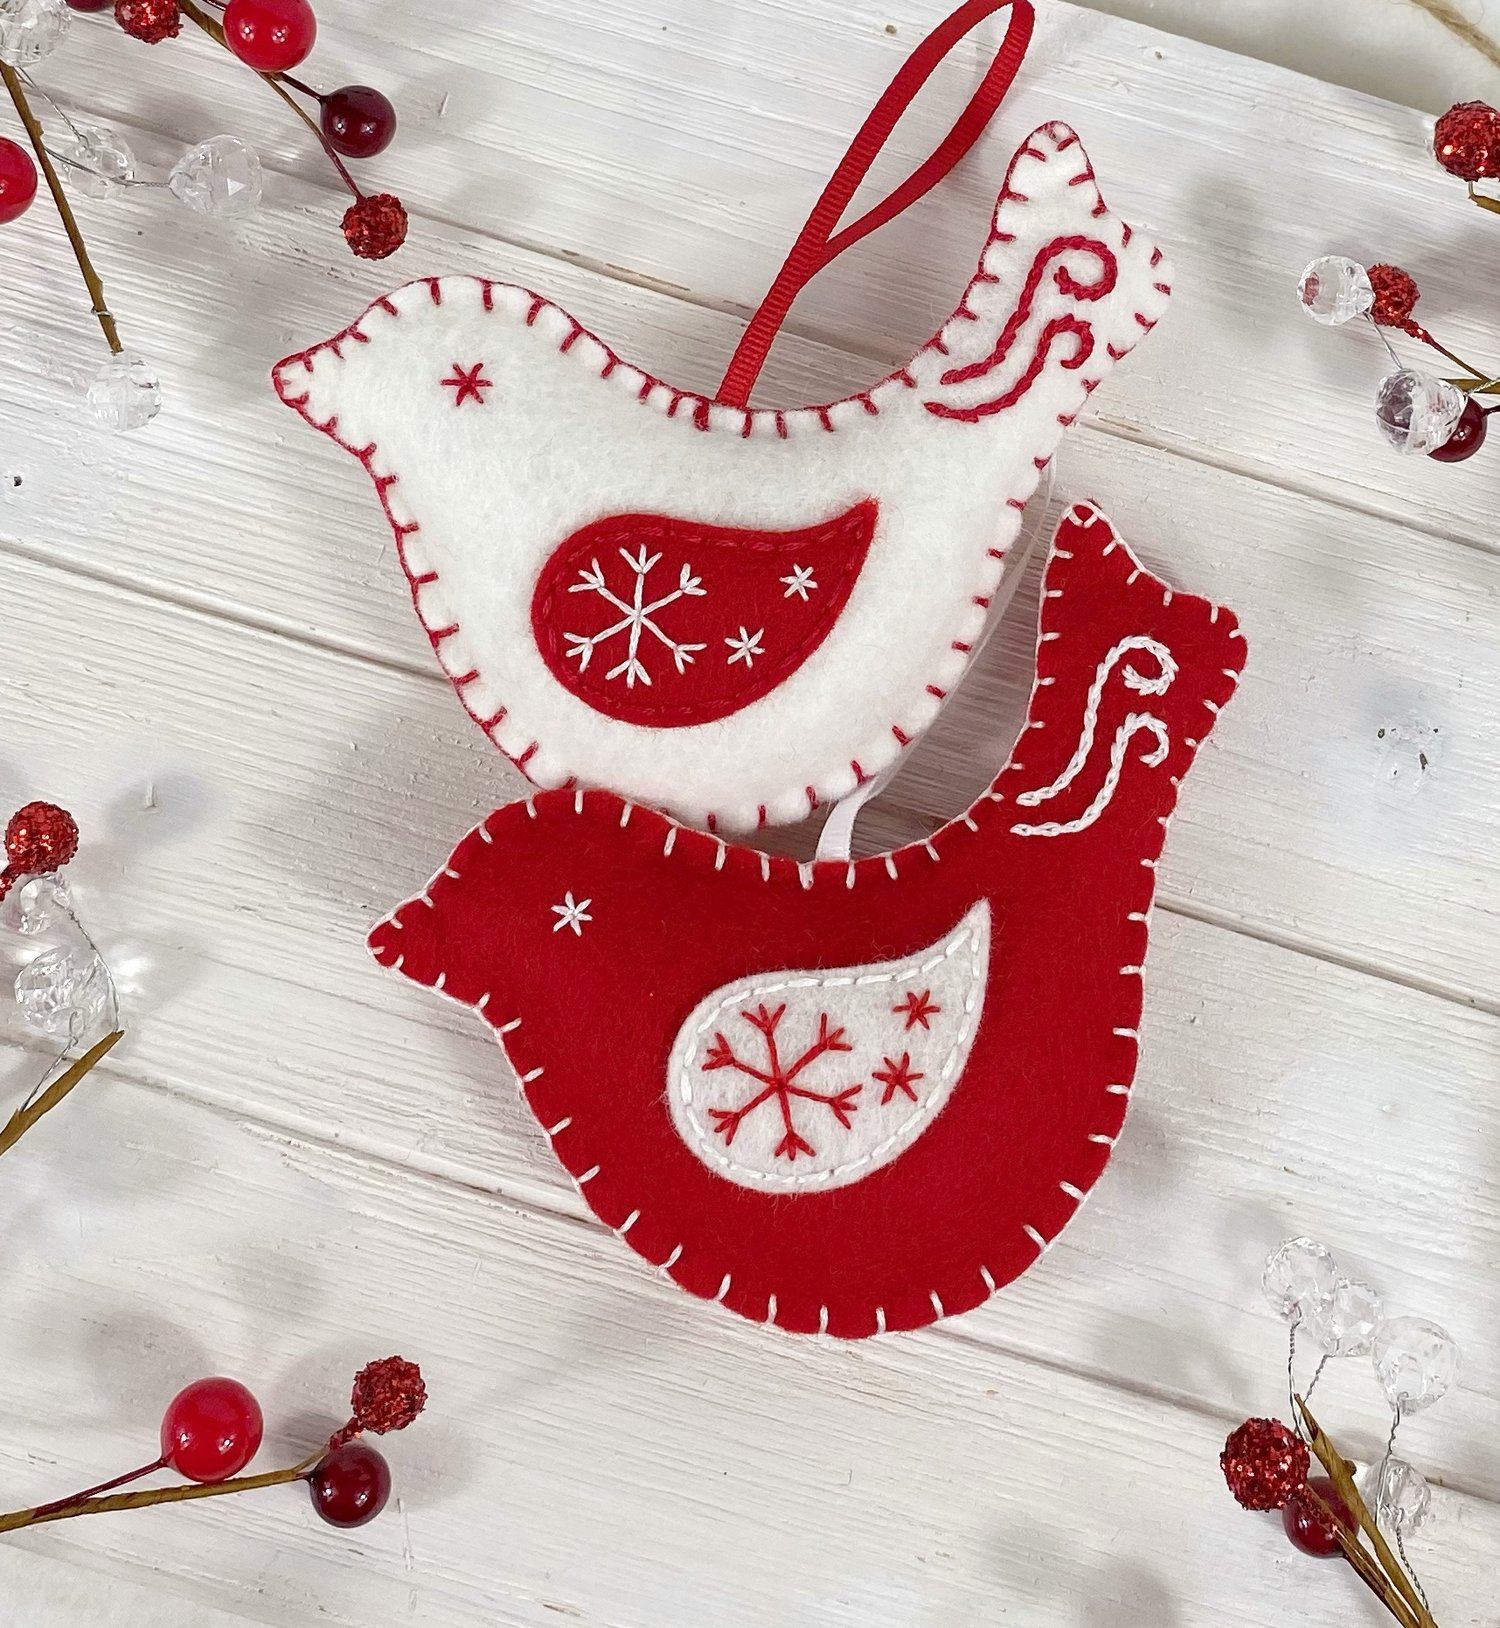 Felt bird Christmas ornaments — The Ornament Boutique